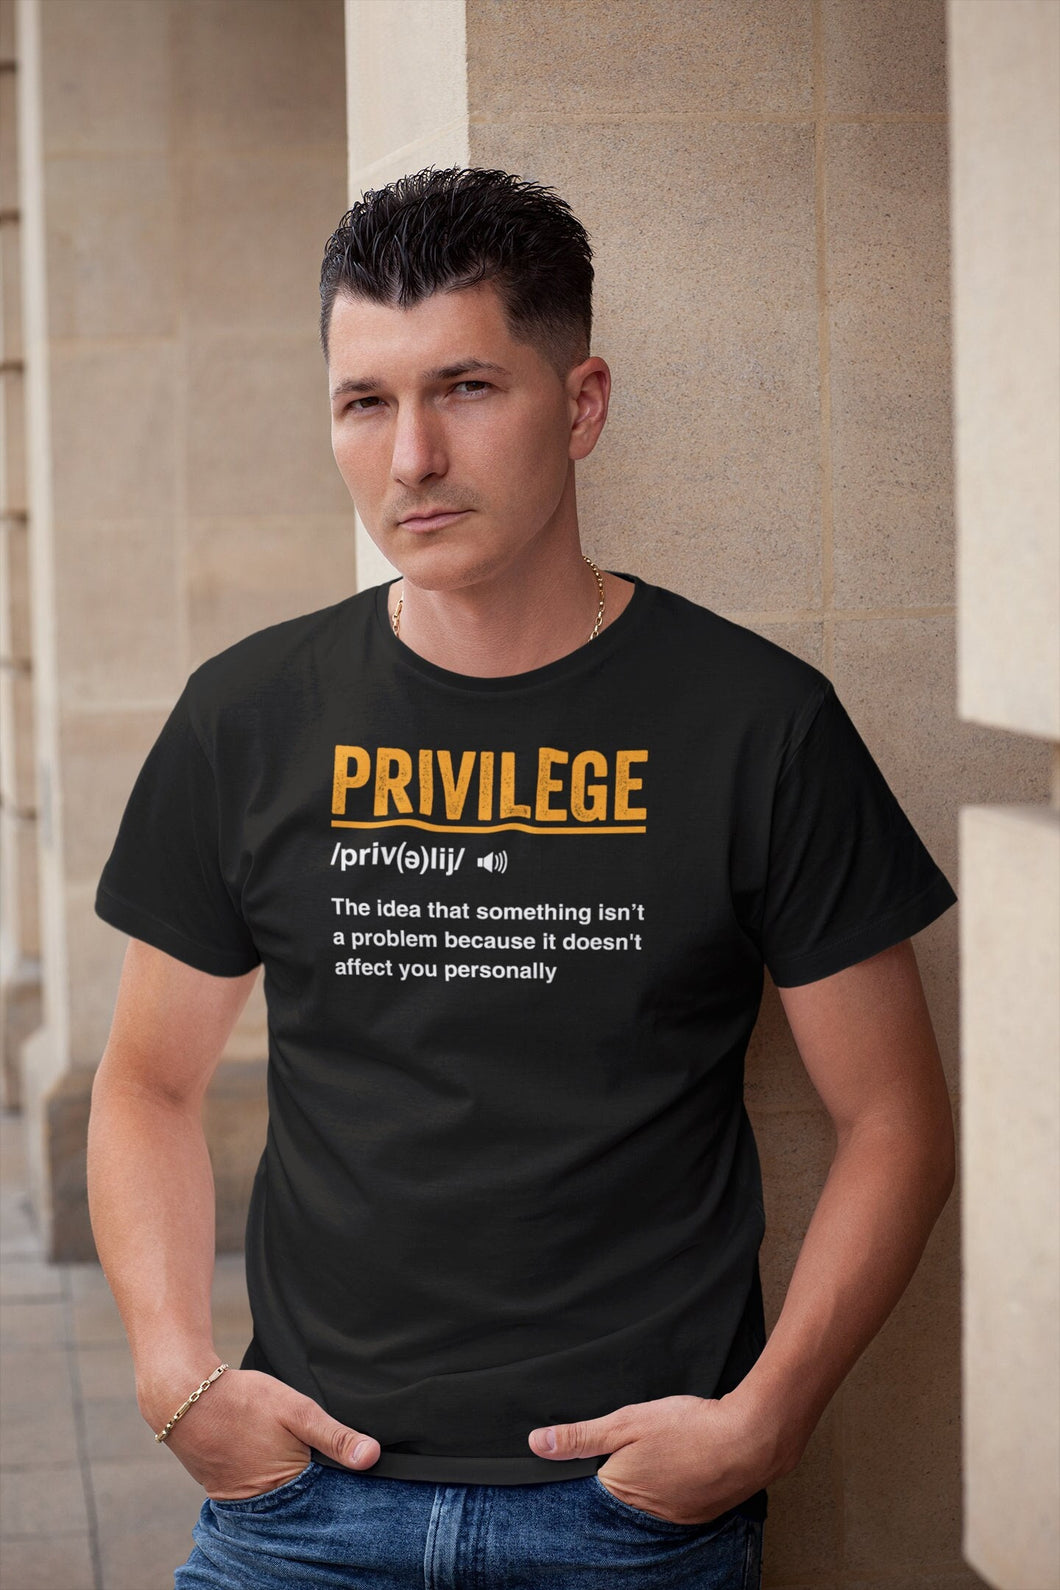 Privilege Shirt, Civil Right Shirt, Equality Shirt, Social Justice Shirt